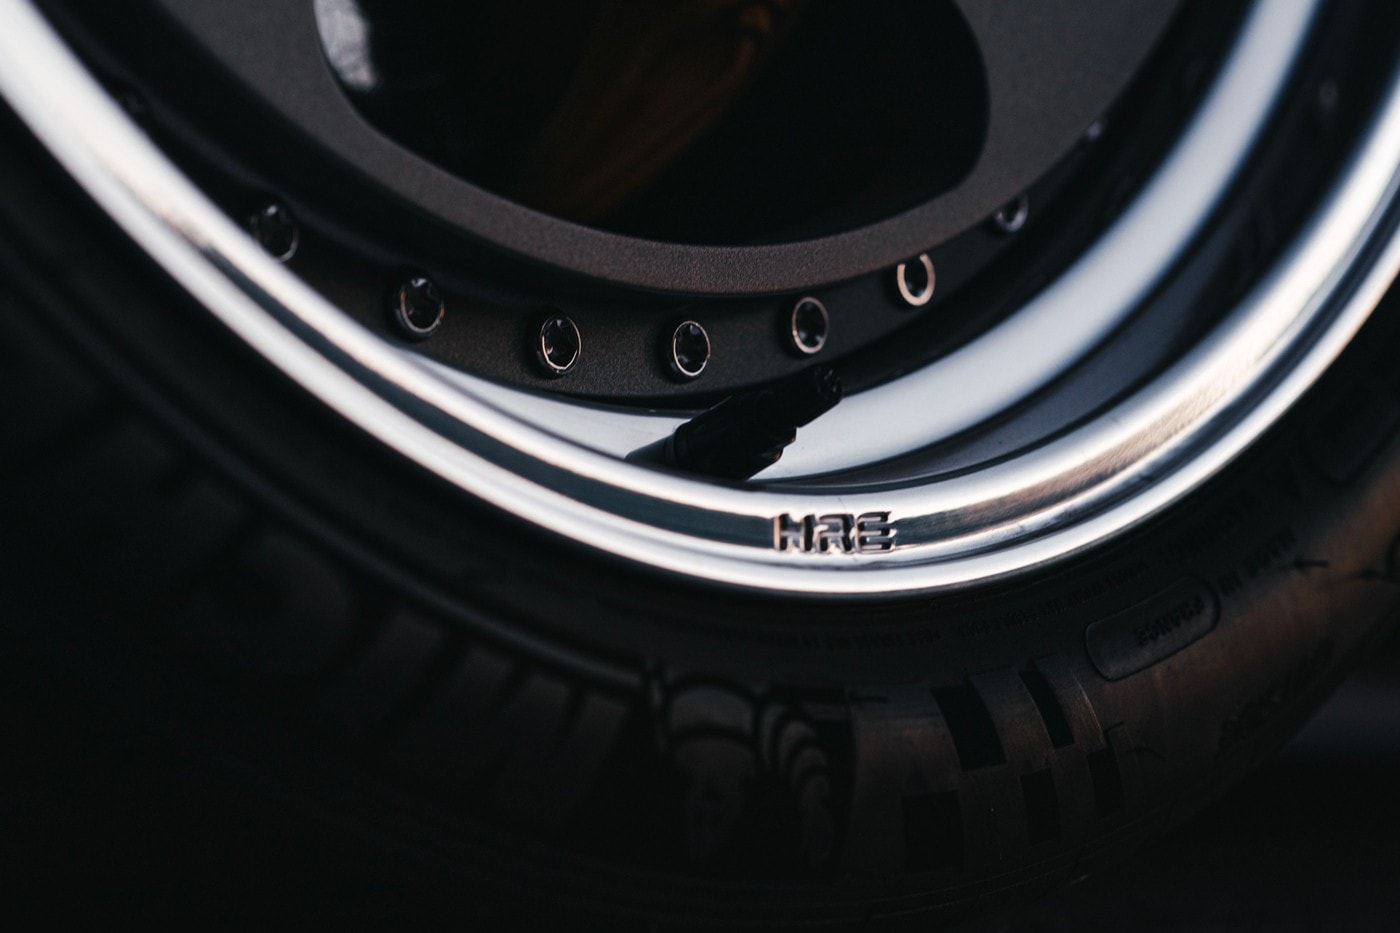 HRE Wheels 發表全新復古風格系列輪框新作